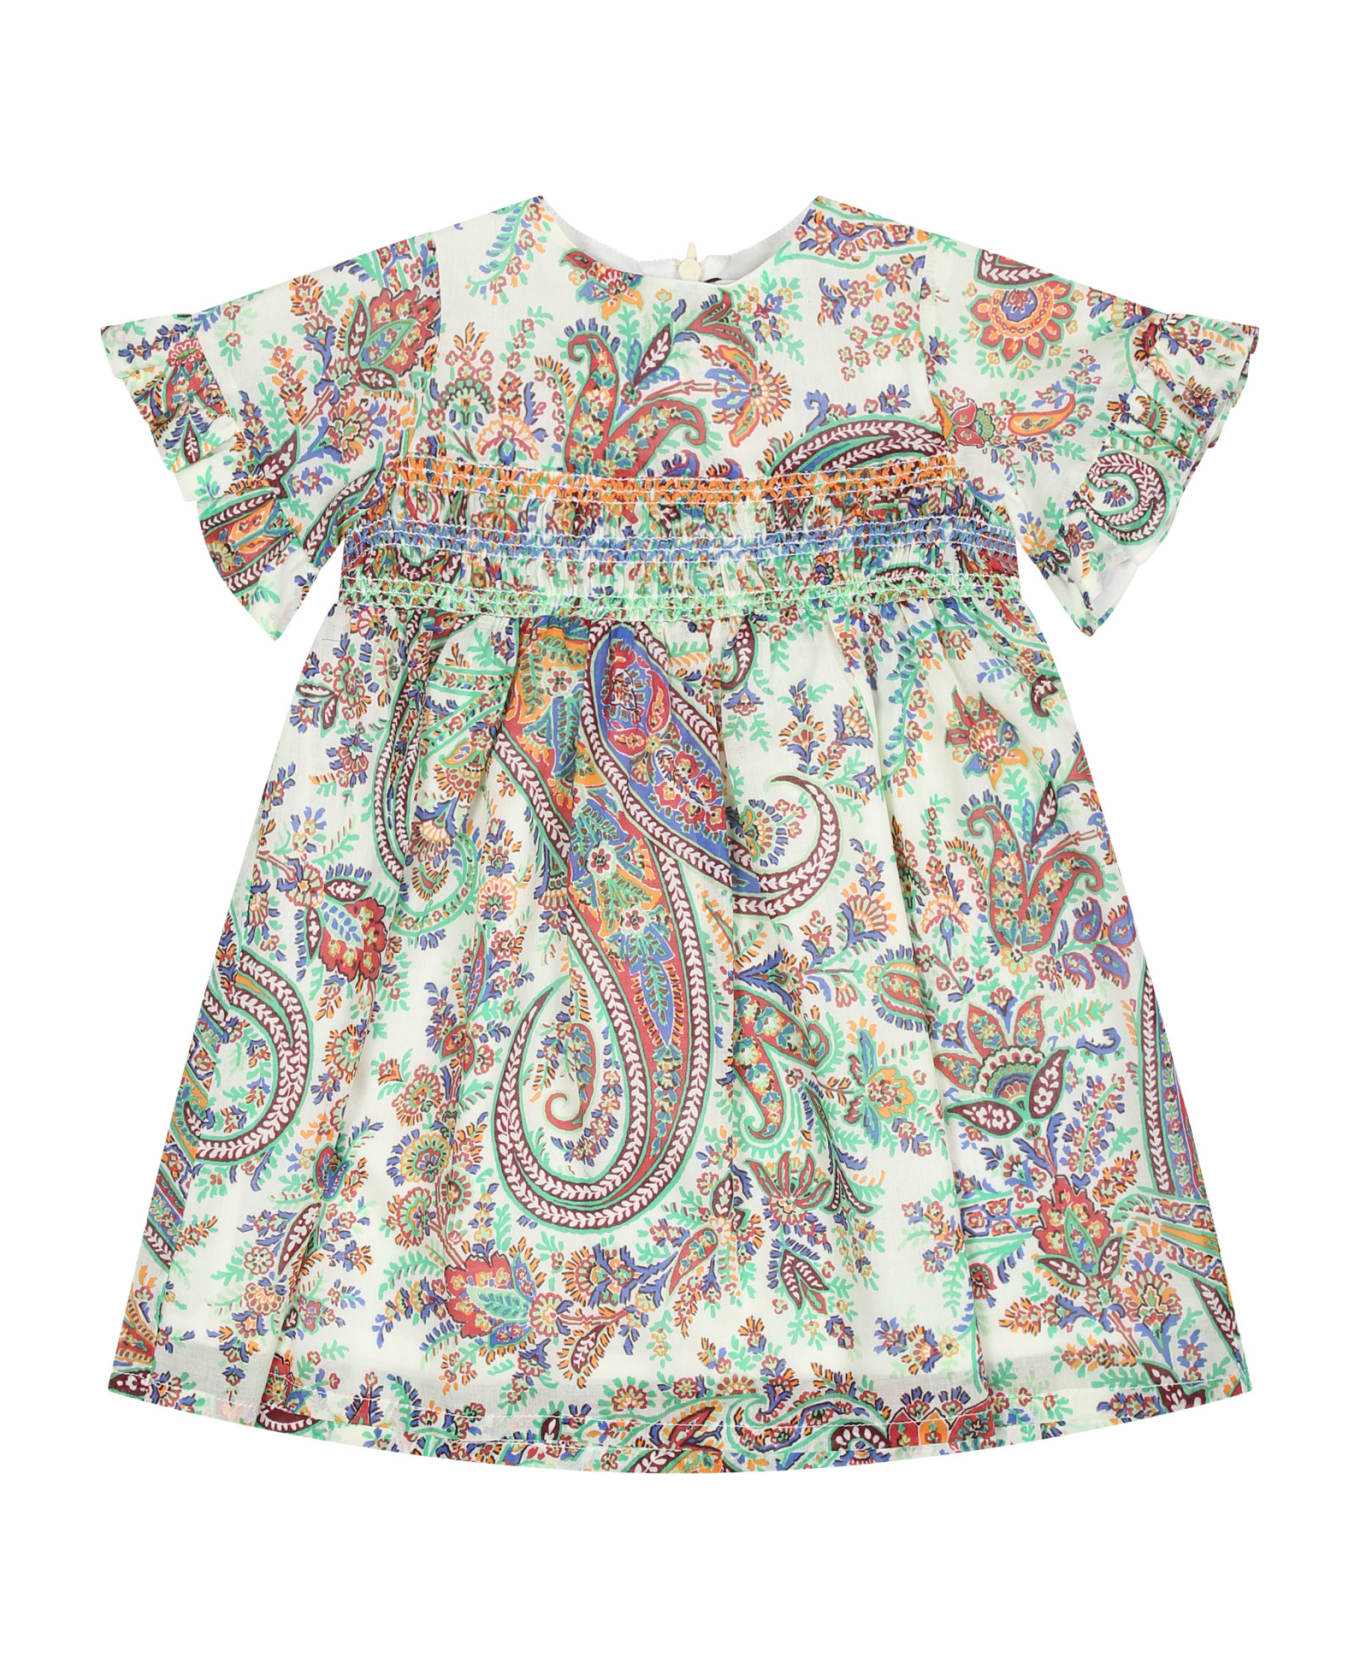 Etro Elegant Ivory Dress For Baby Girl With Paisley Pattern - Ivory ウェア